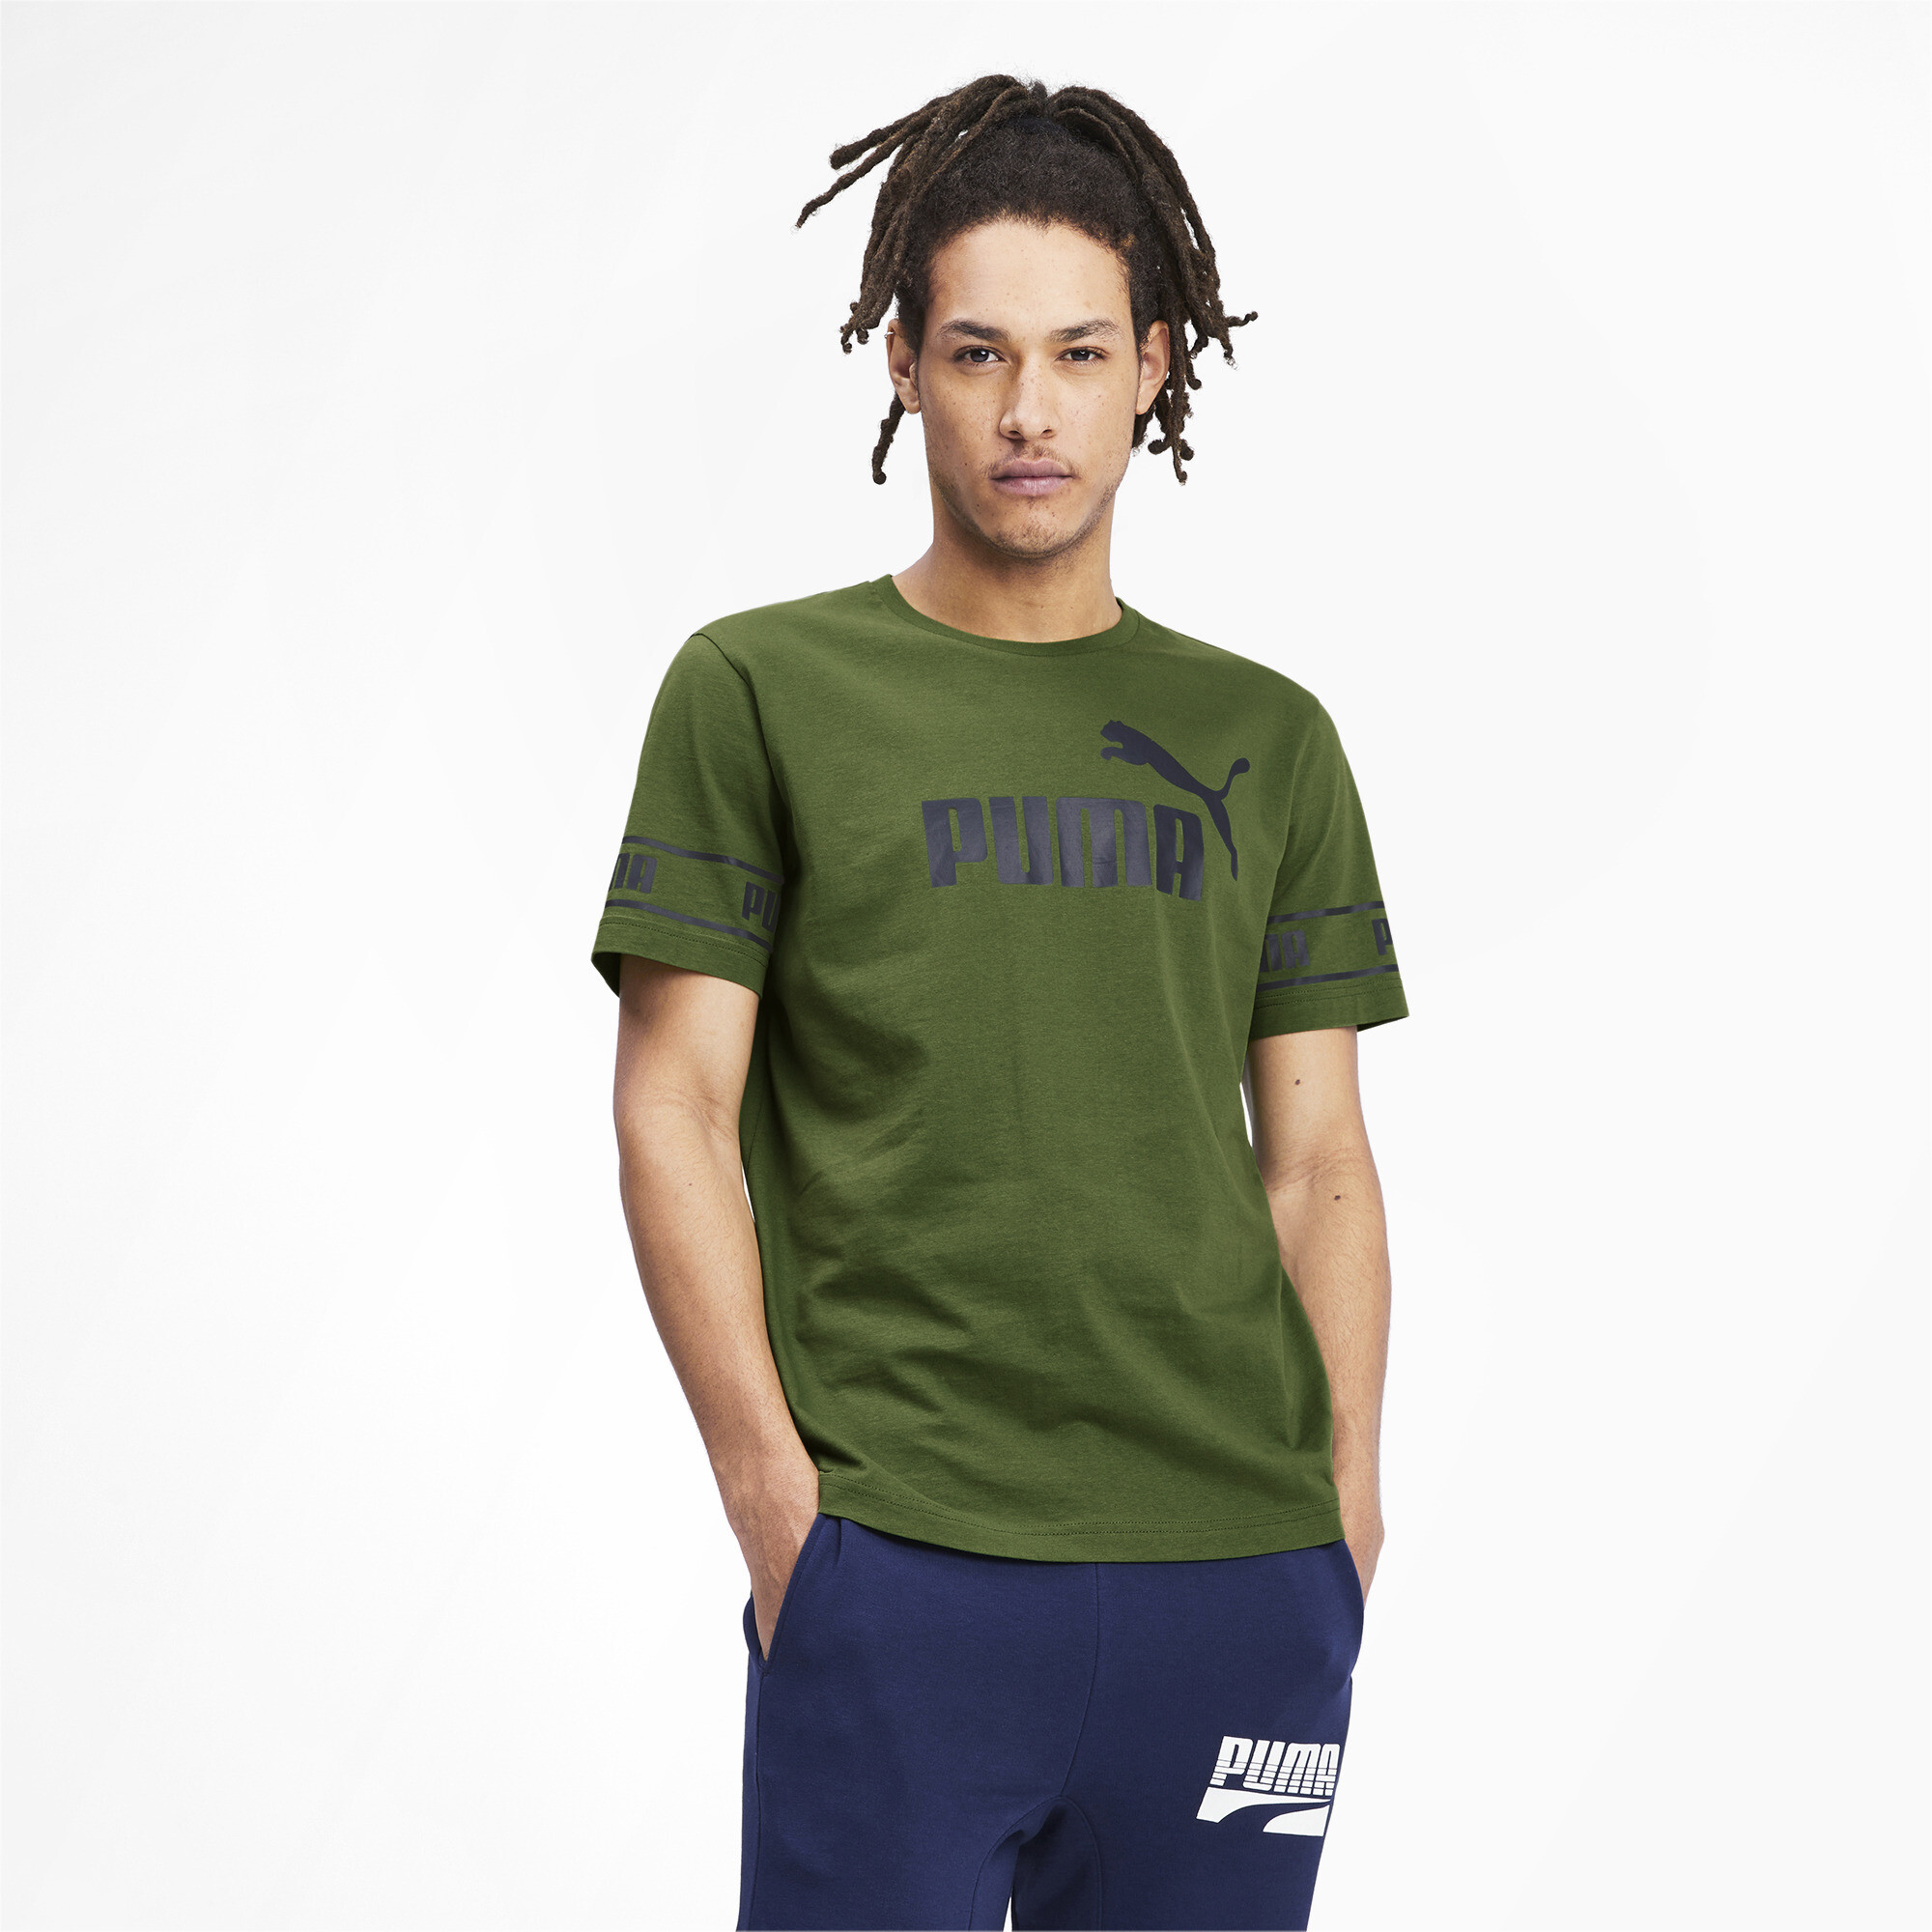 Men's Puma Amplified's T-Shirt, Green, Size S, Clothing